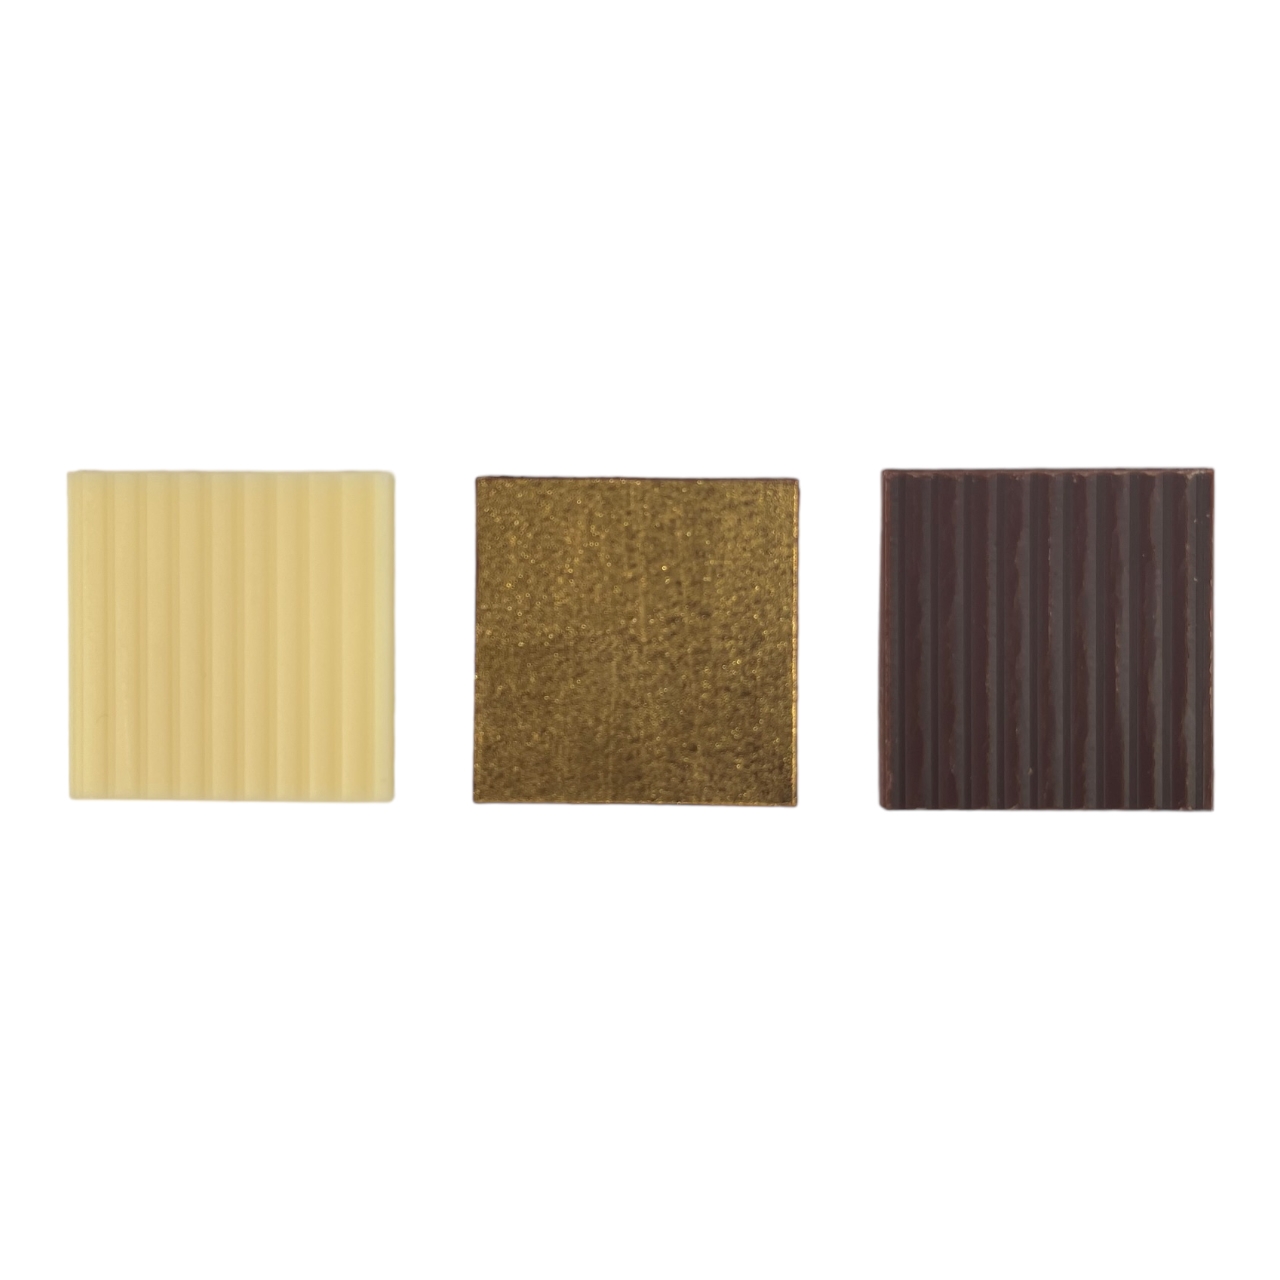 Choco Deco - Quadrat - Dorado Gold  - 460 Stück (30 x 30 mm) Shantys